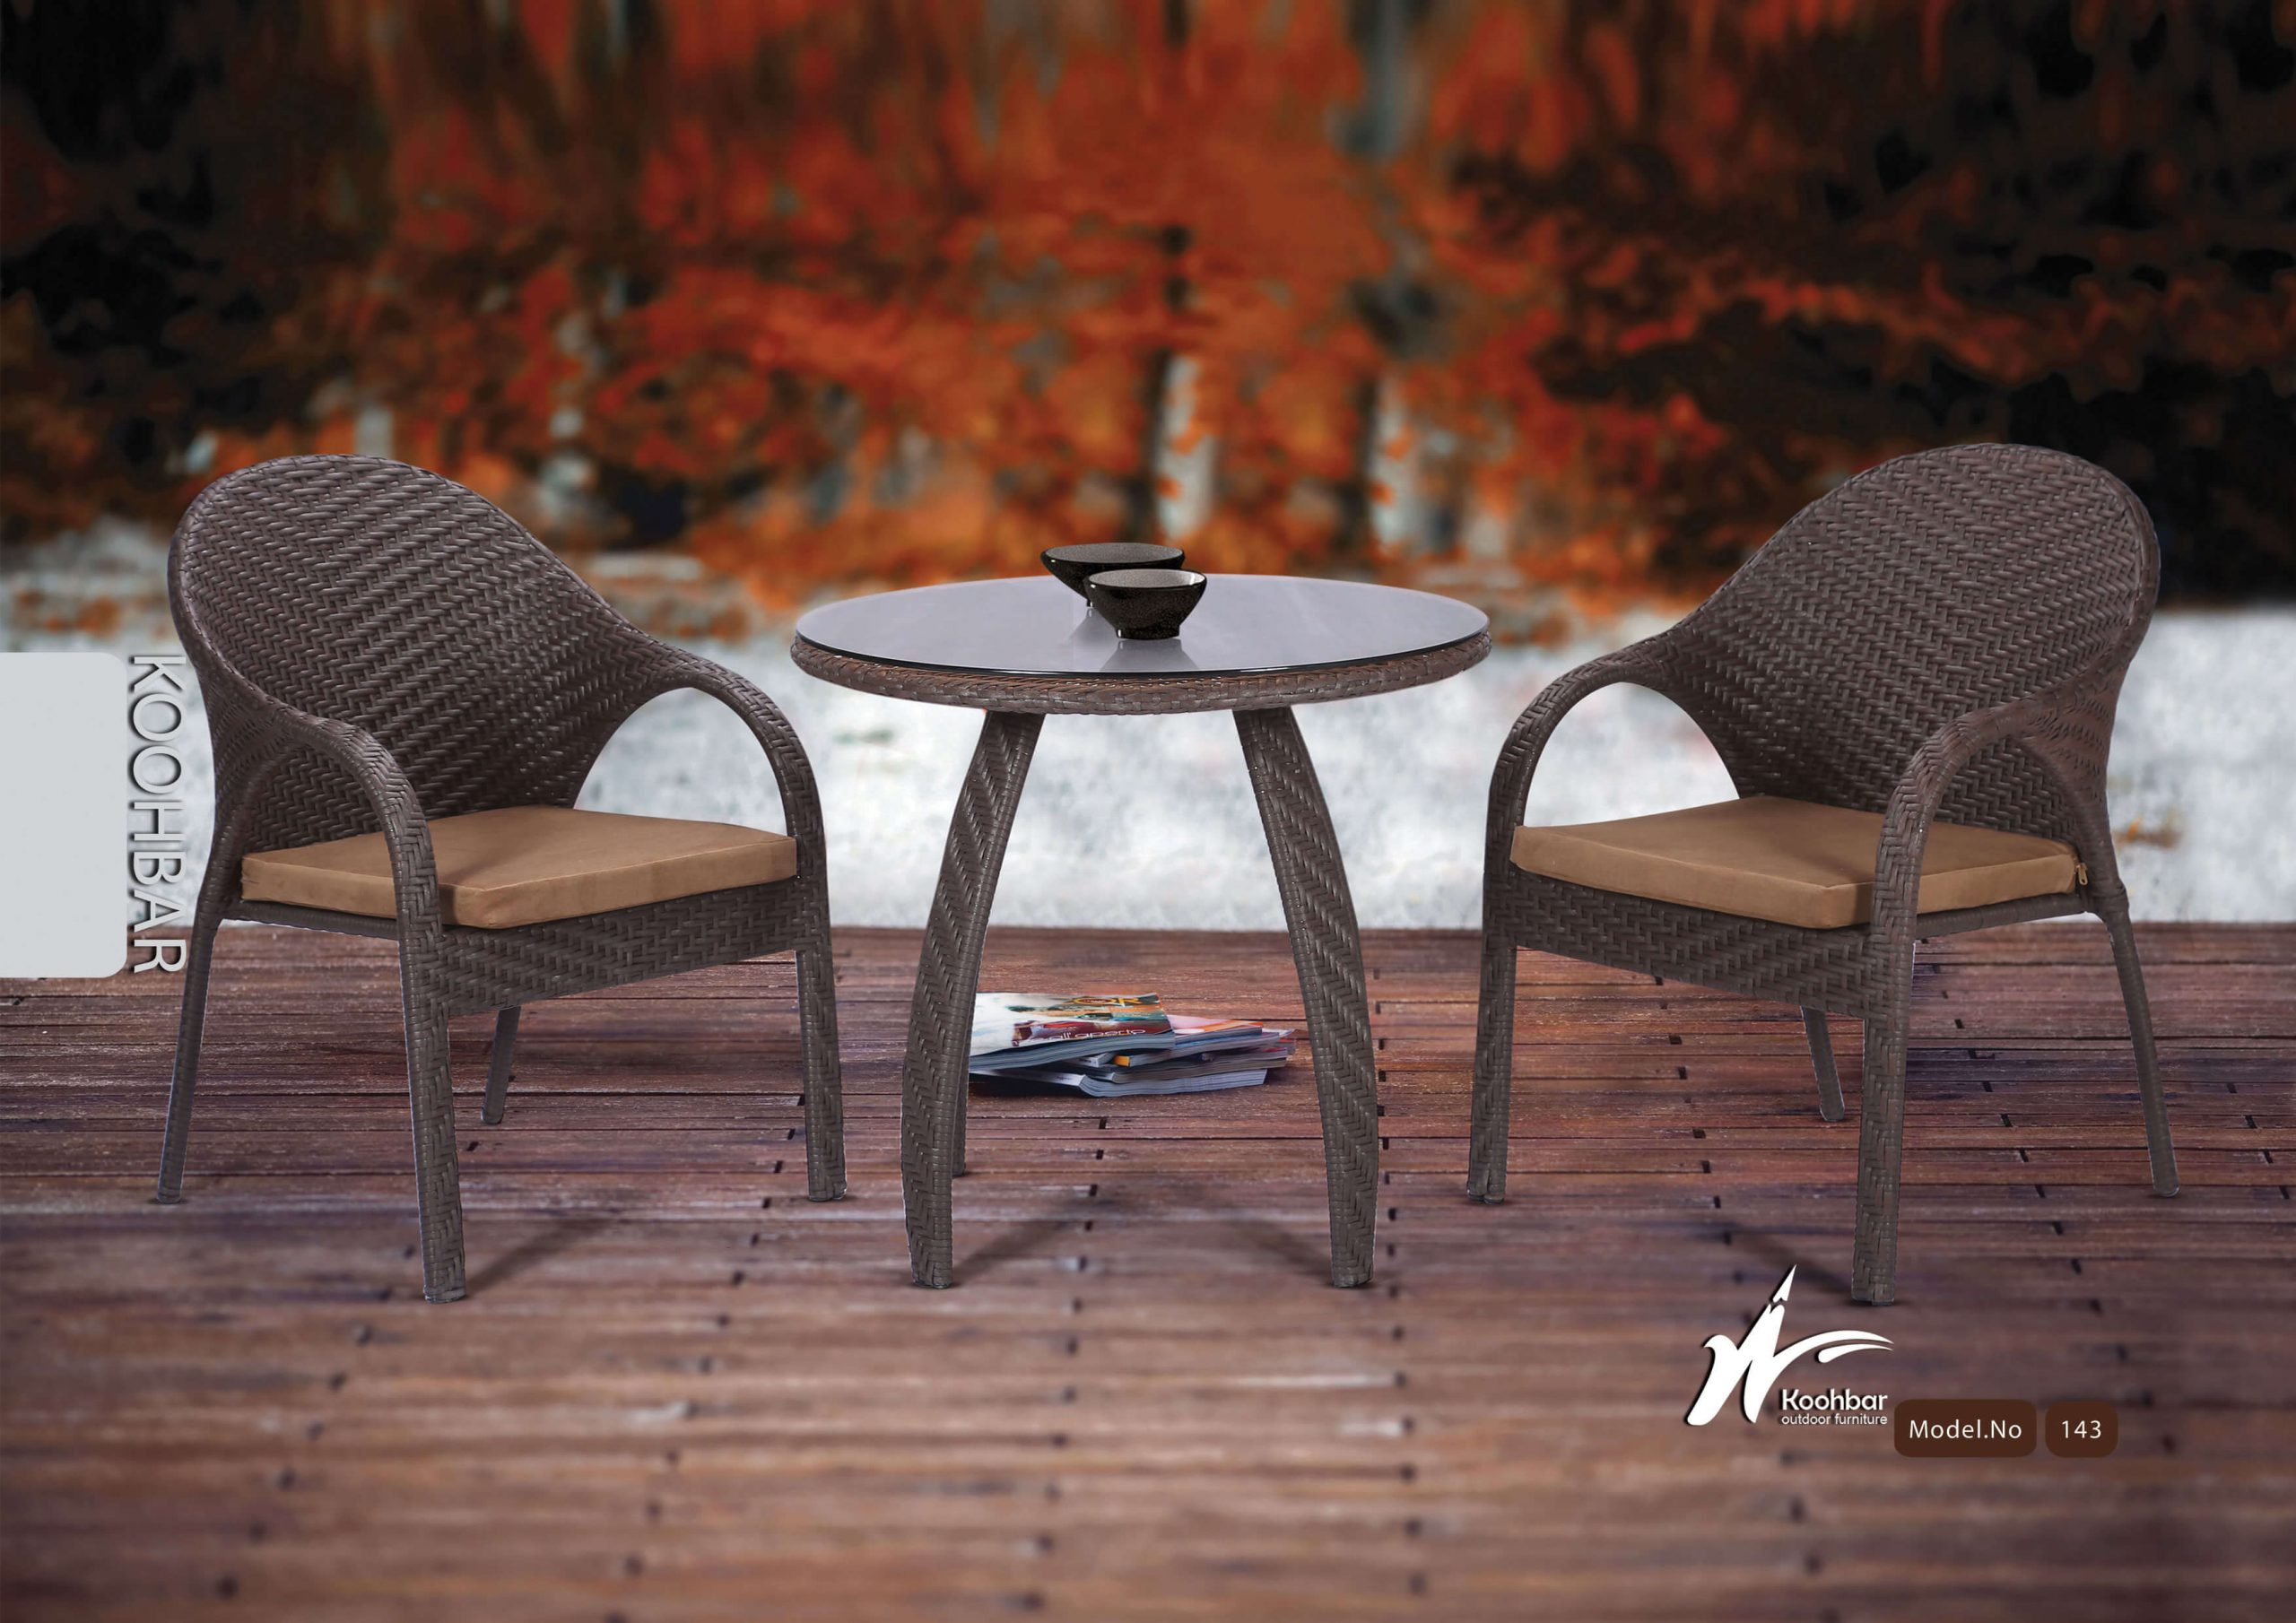 kohbar patio conversation sets 143 model0 scaled - ست میز صندلی چایخوری محوطه کوهبر مدل ۱۴۳ -  - patio-conversation-sets